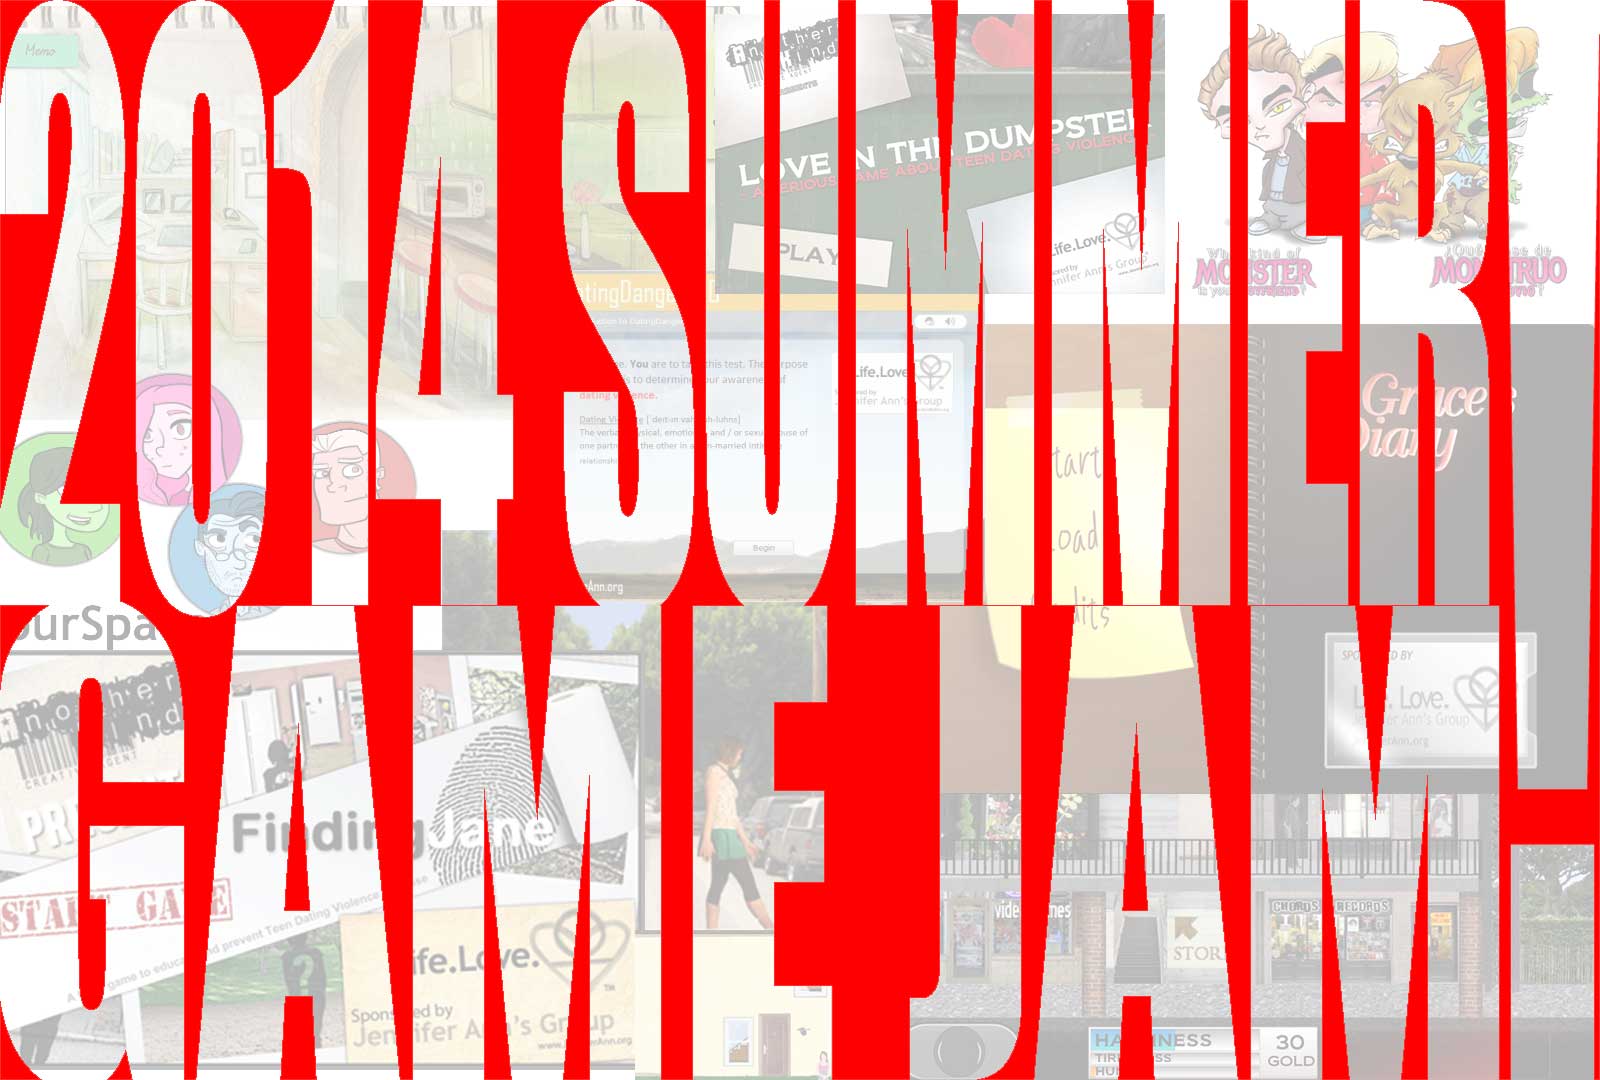 2014 Summer Game Jam presented by Jennifer Ann's Group, Southern Polytechnic State University, Теплица социальных технологий, and Georgia Game Developers Association.